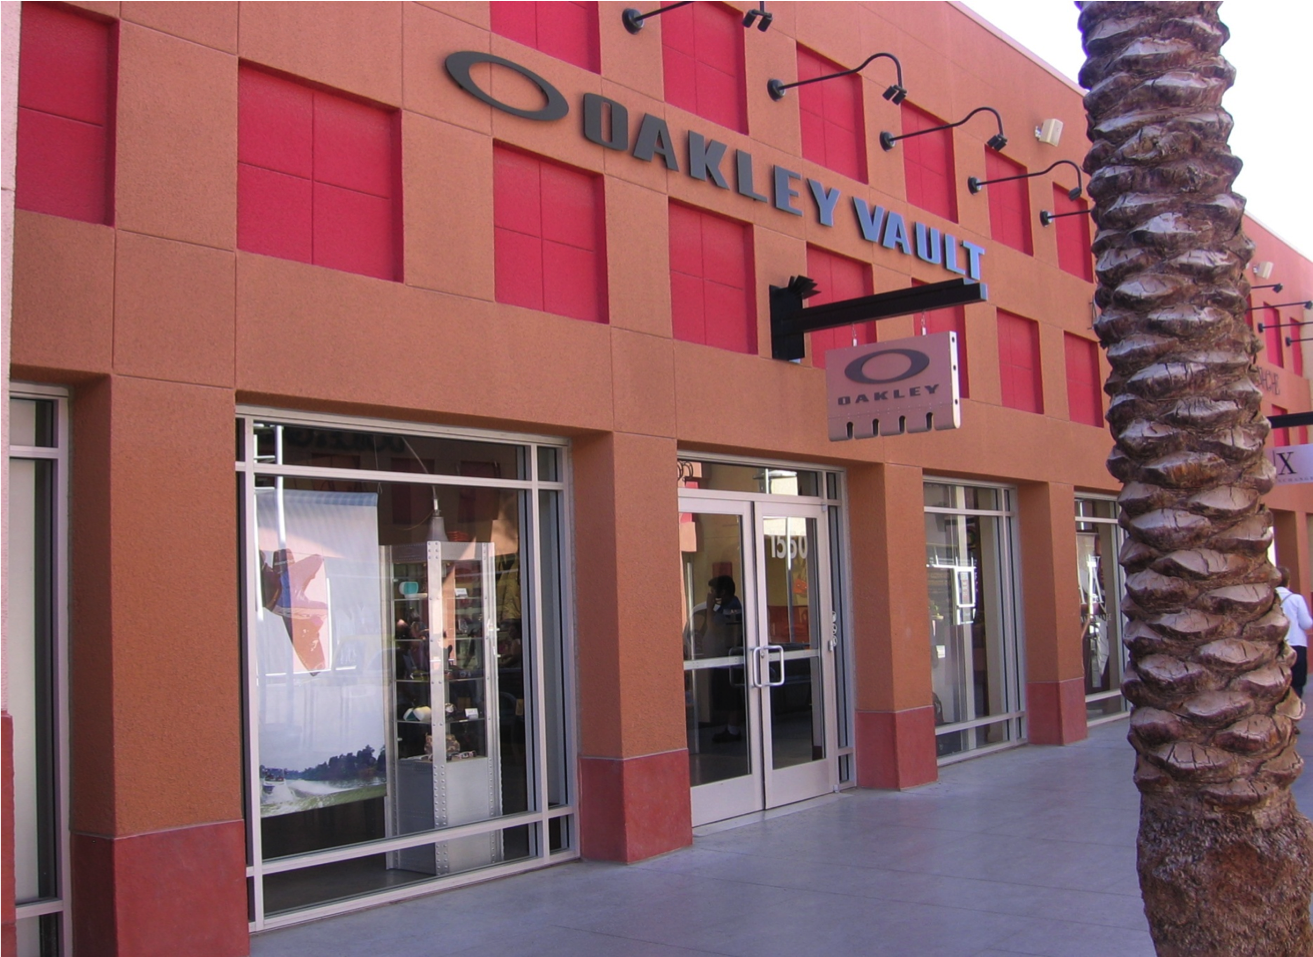 oakley vault outlet stores